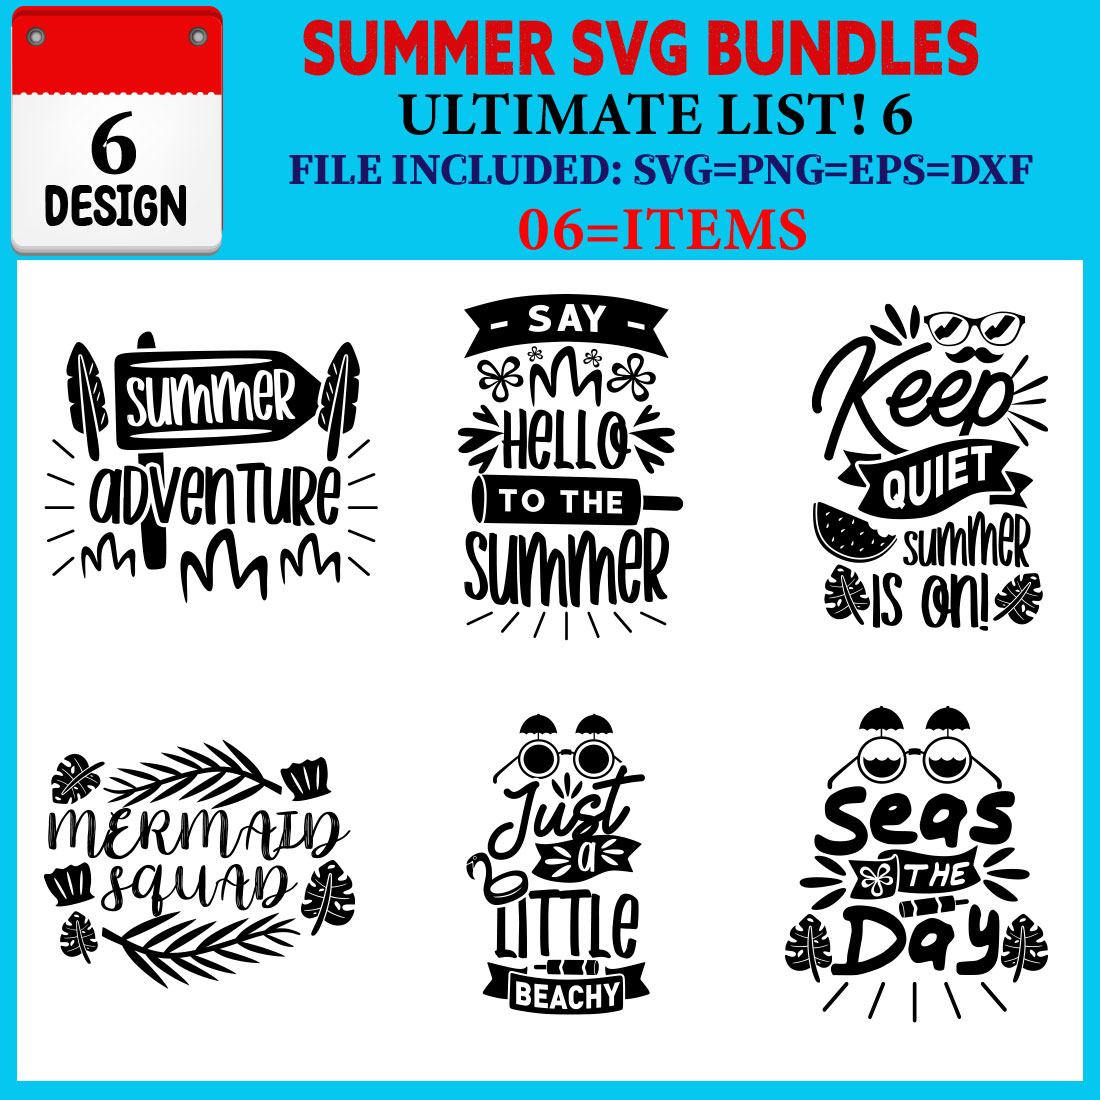 Summer T-shirt Design Bundle Vol-07 cover image.